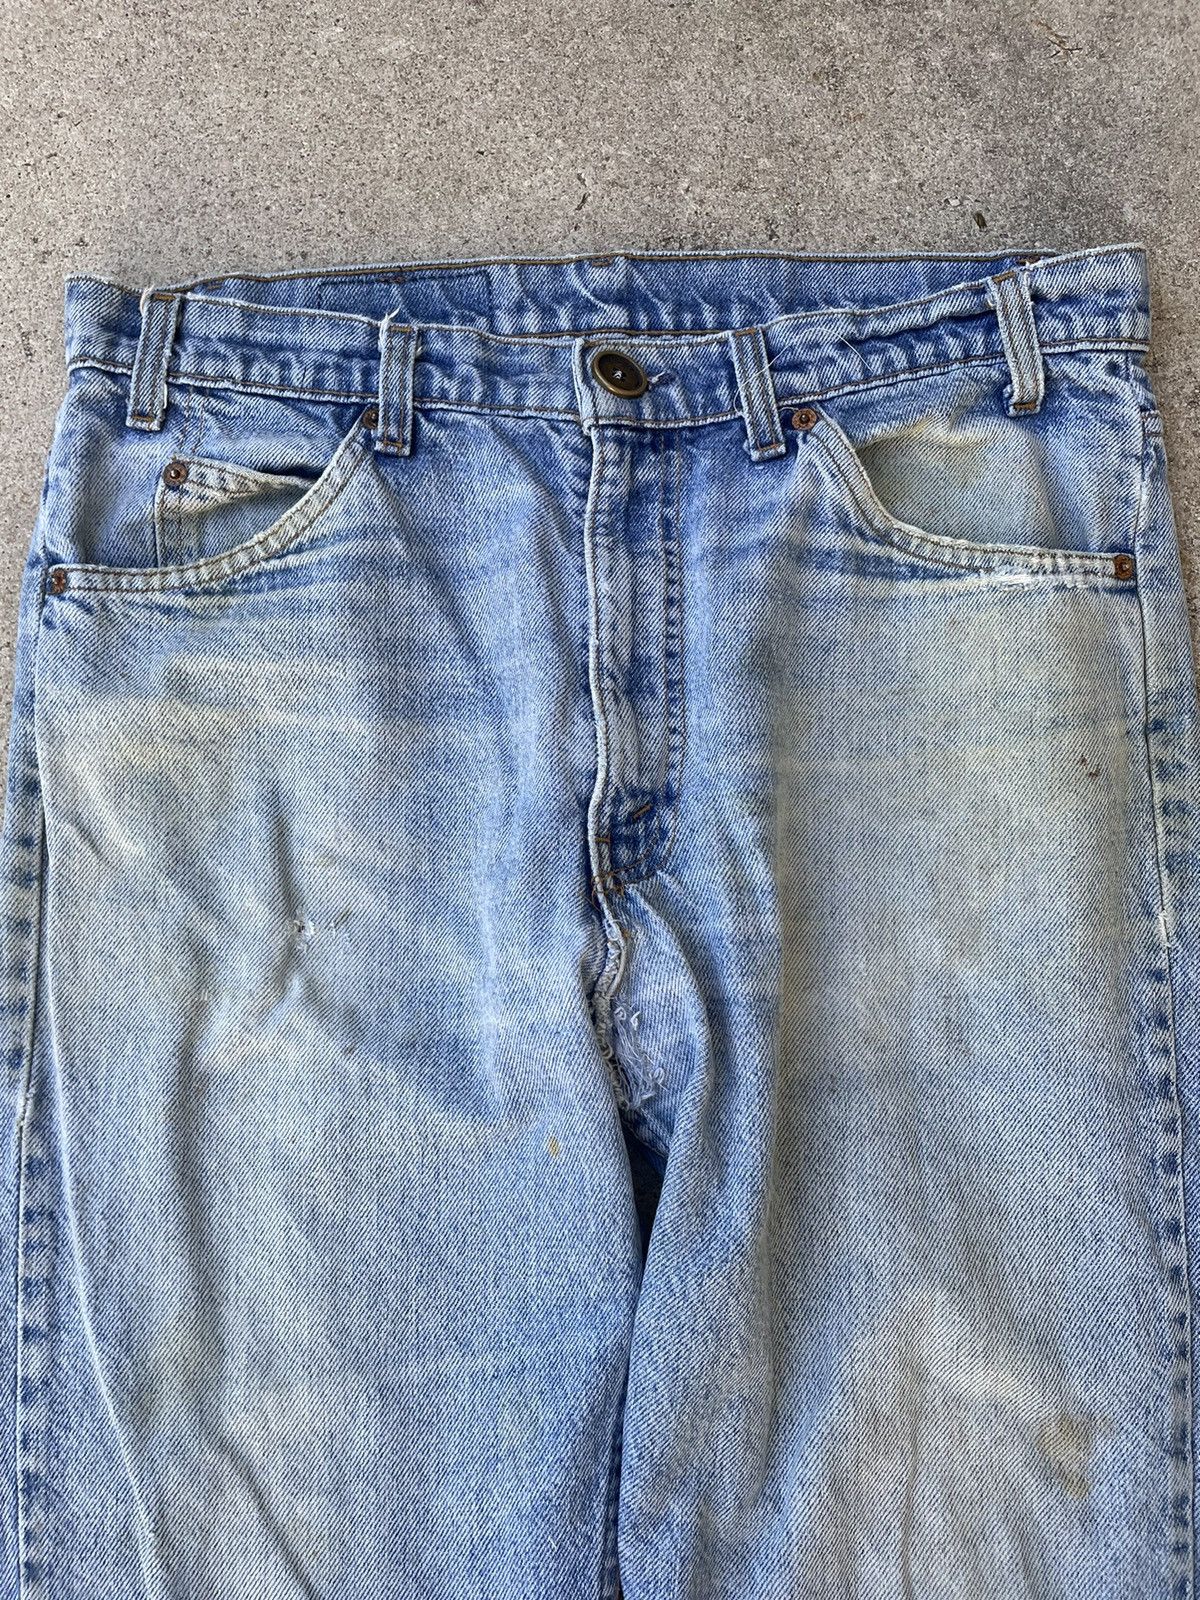 Vintage Vtg 80s Levis 517 Orange Tab Bootcut Distressed Jeans 34x31 Size US 32 / EU 48 - 5 Thumbnail